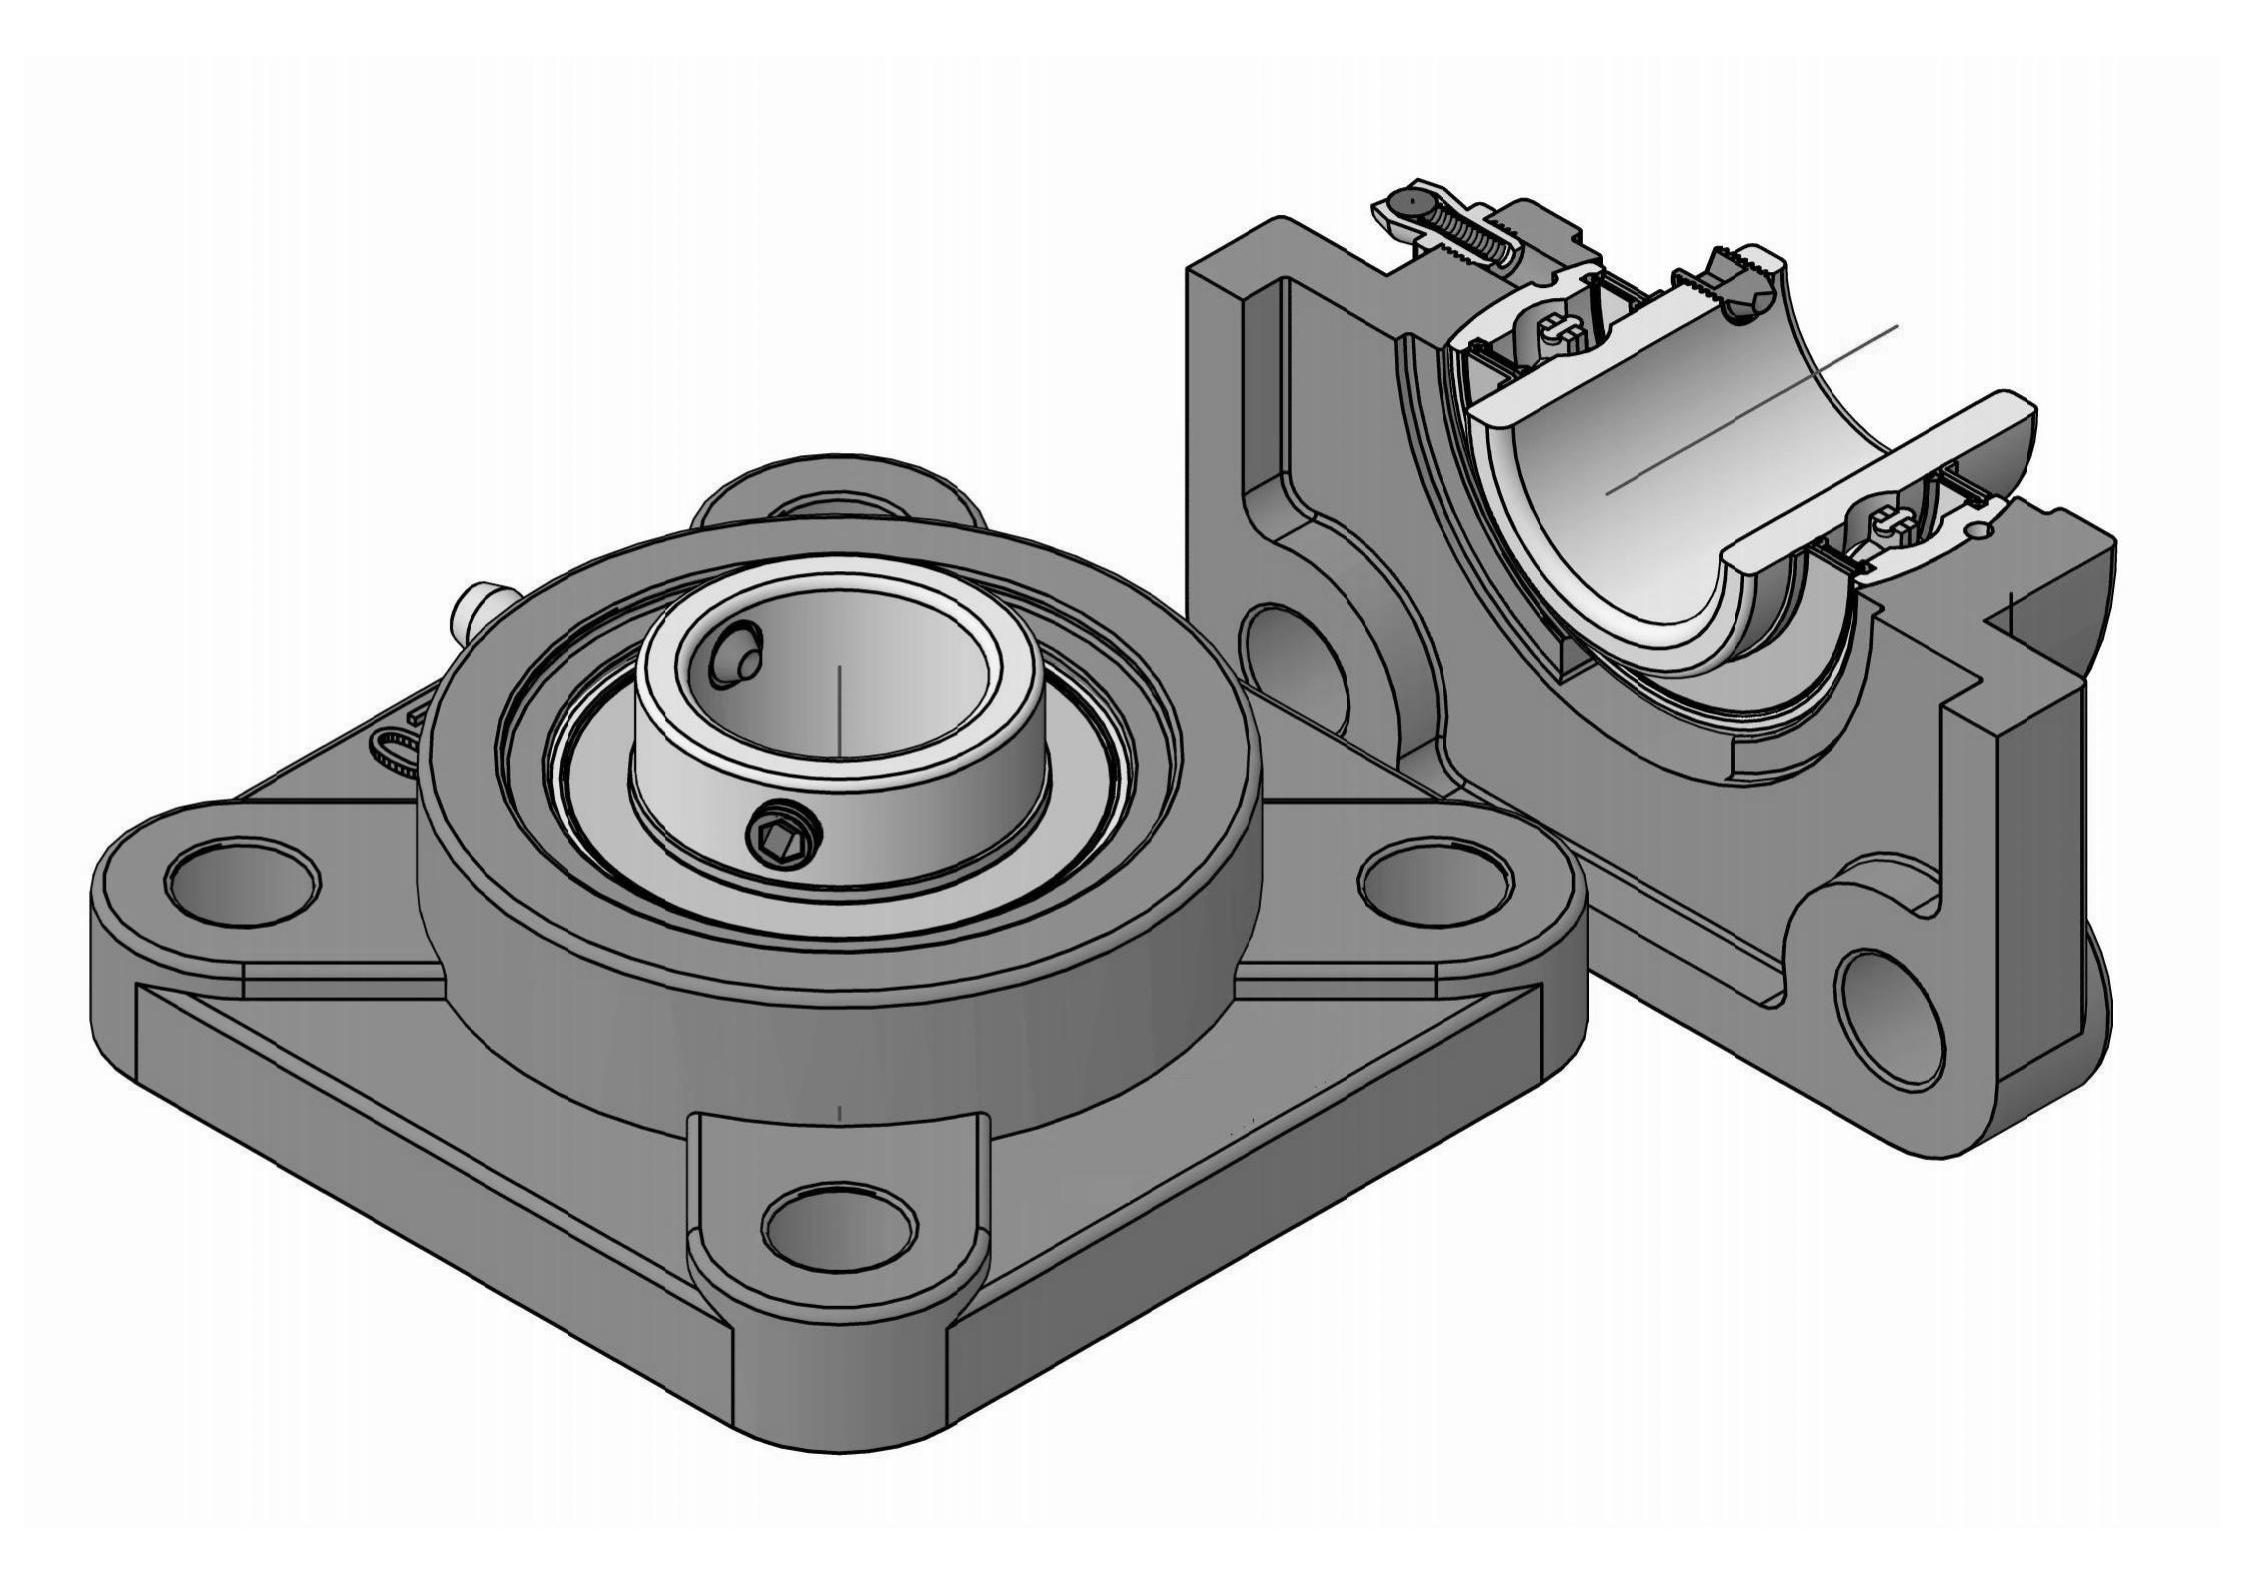 UCFX14-44 fjouwer Bolt Square flange bearing units mei 2-3/4 inch boring